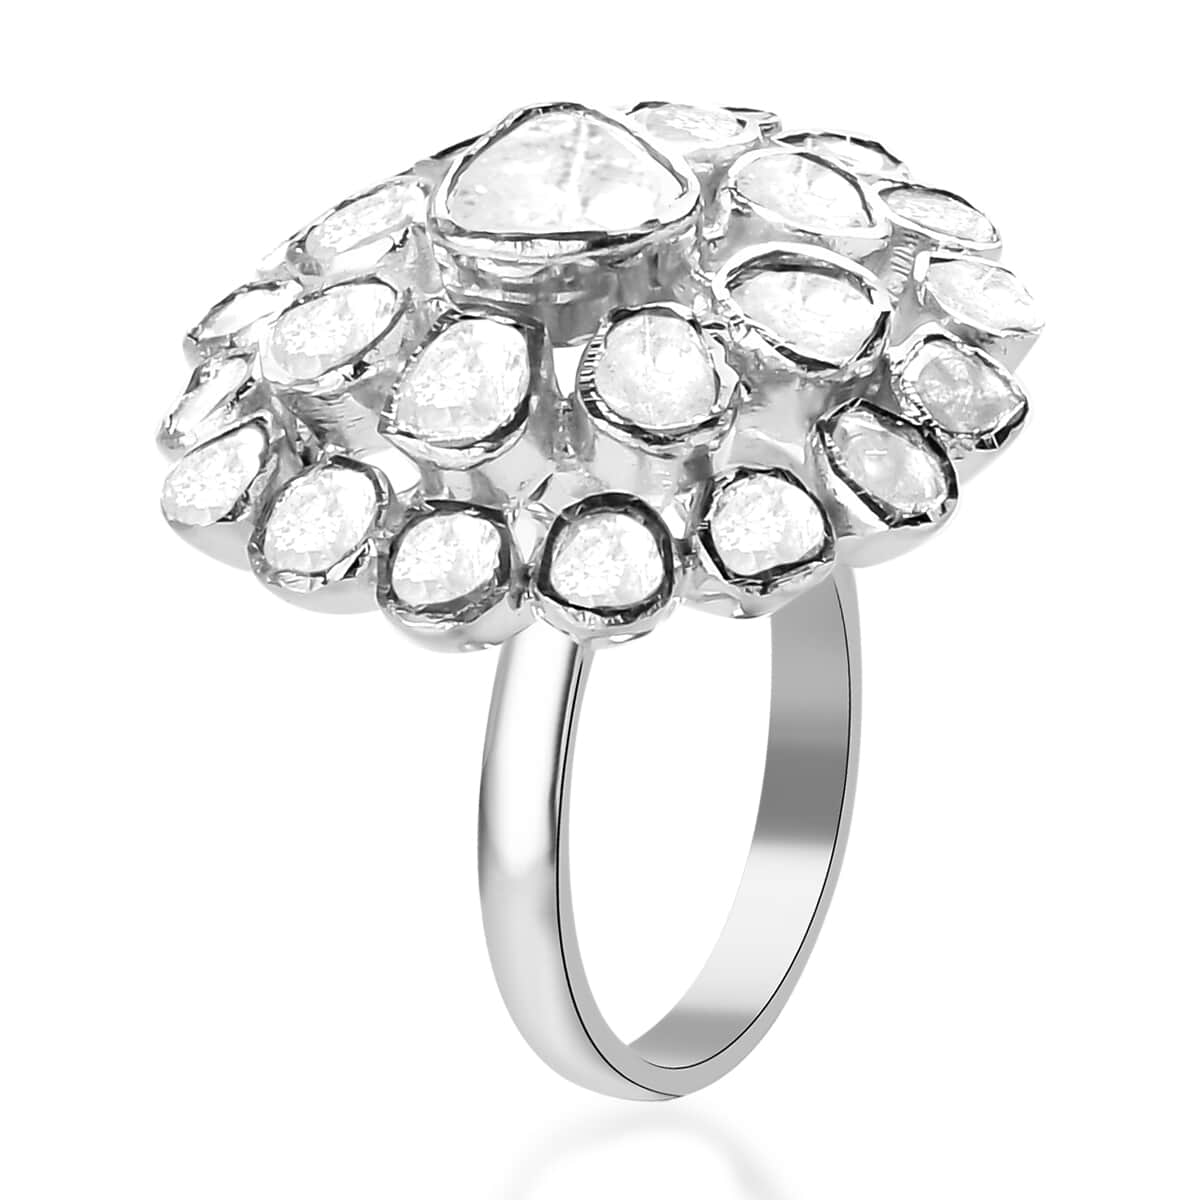 Polki Diamond Ring in Platinum Over Sterling Silver (Size 7.0) 2.00 ctw